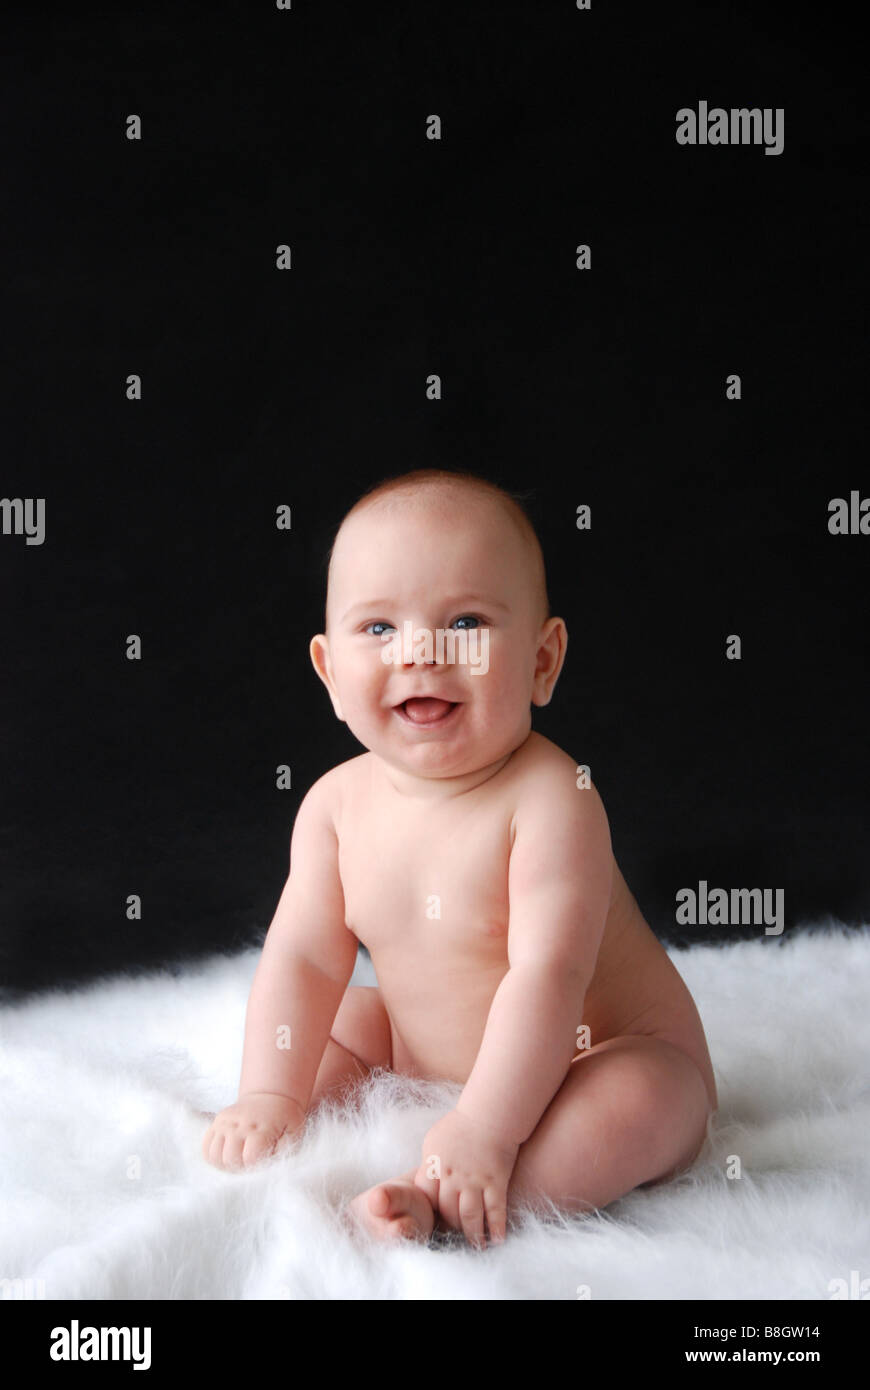 Naked baby sitting up with big smile Stock Photo